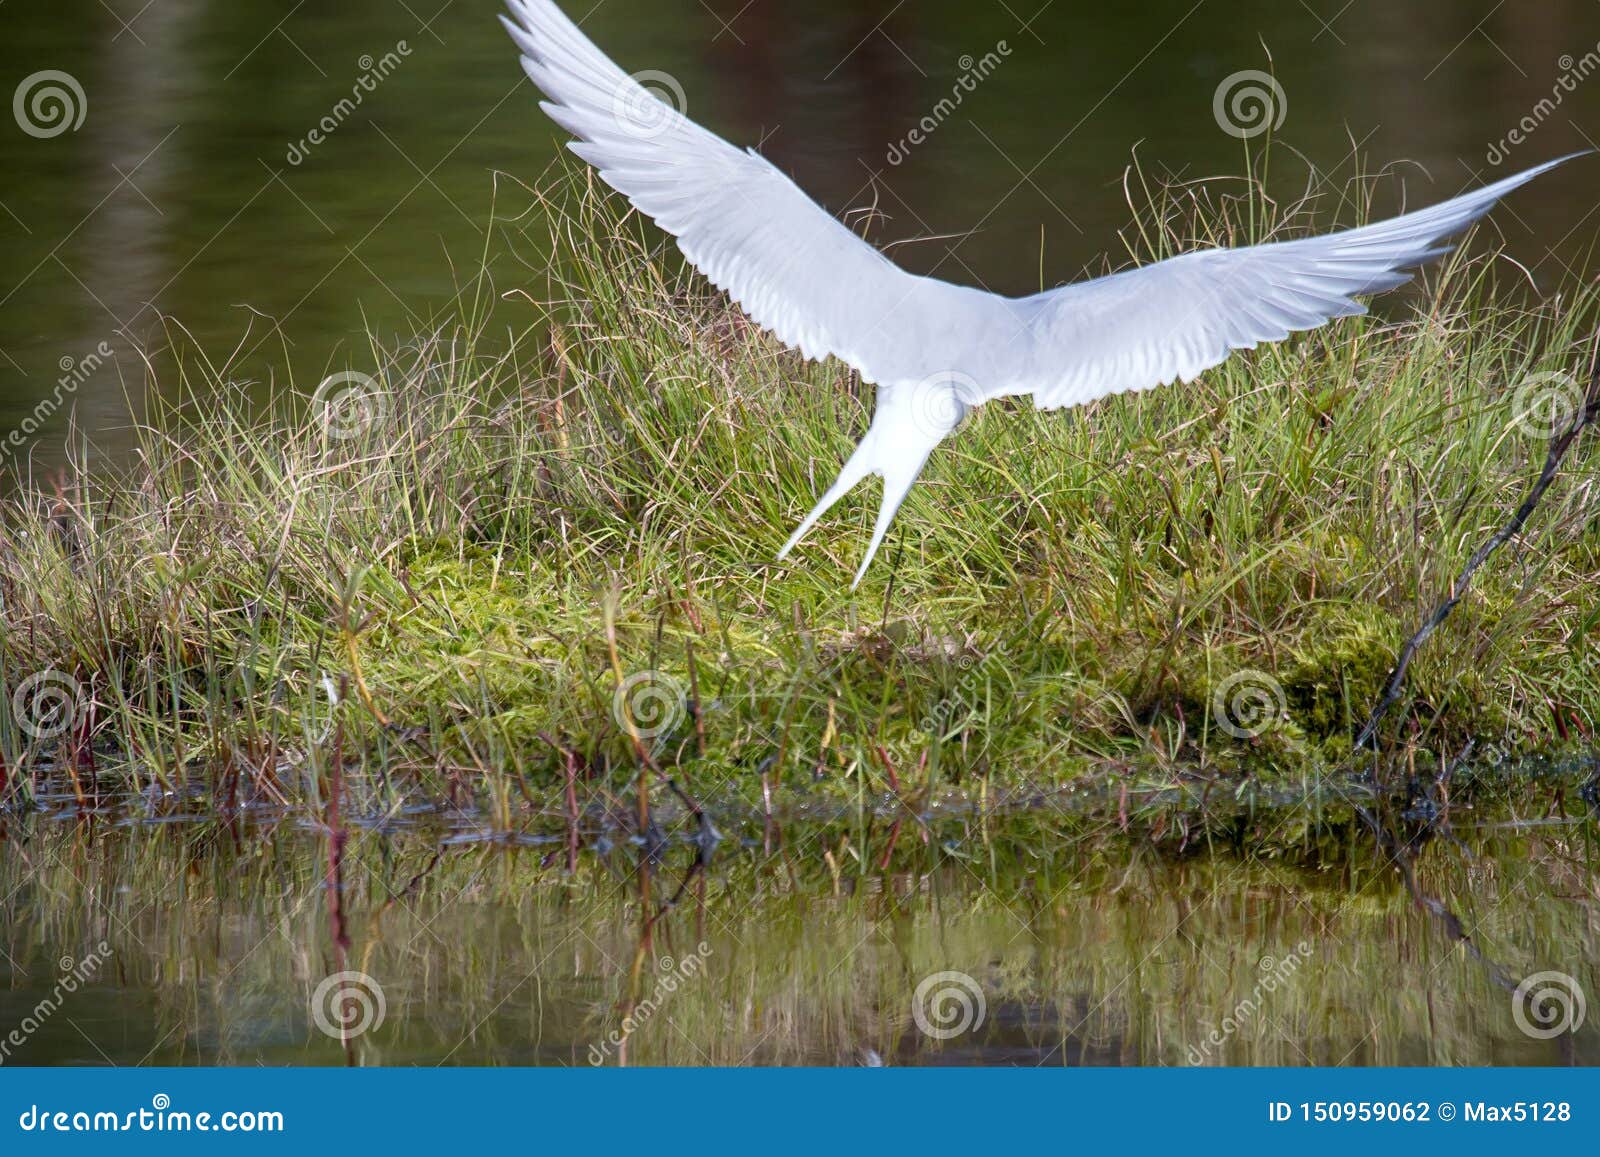 Polar Tern Made A Nest On A Small Island Stock Photo - Image of ecology, behaviour: 150959062